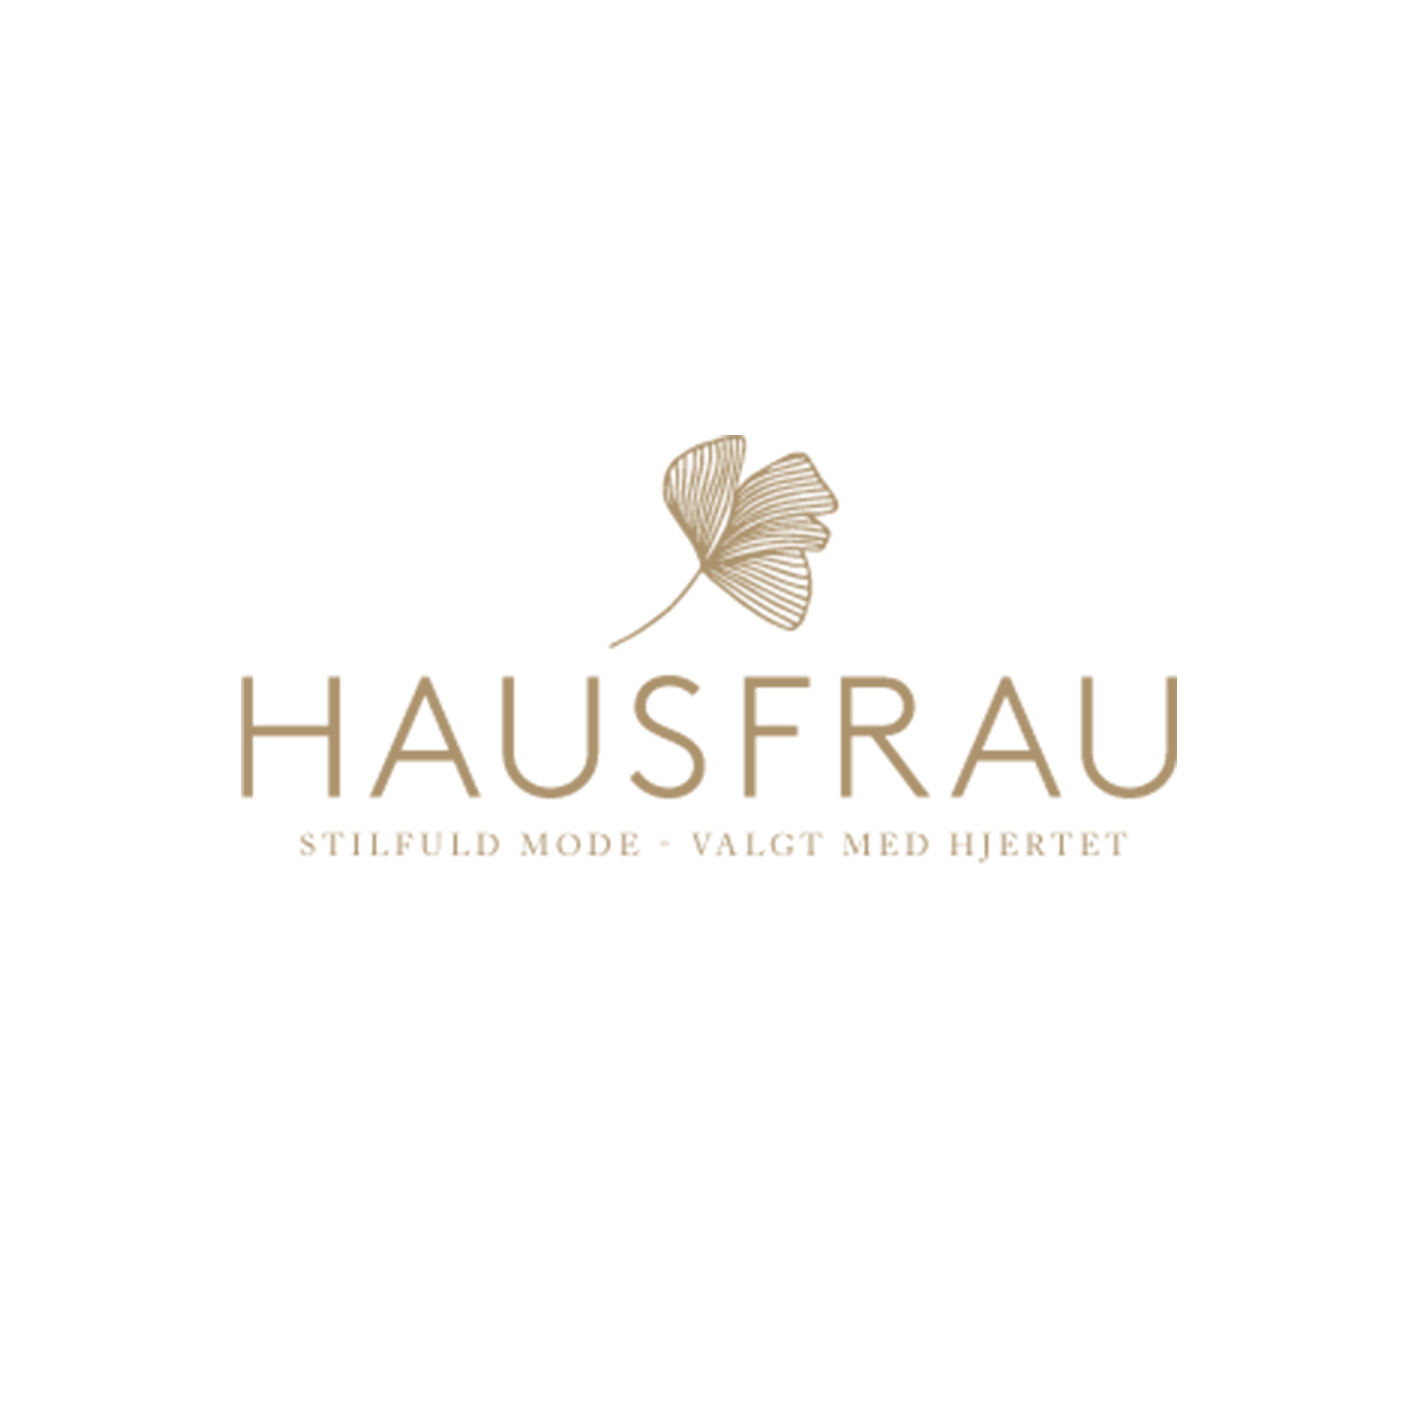 Hausfrau shop from Silkeborg